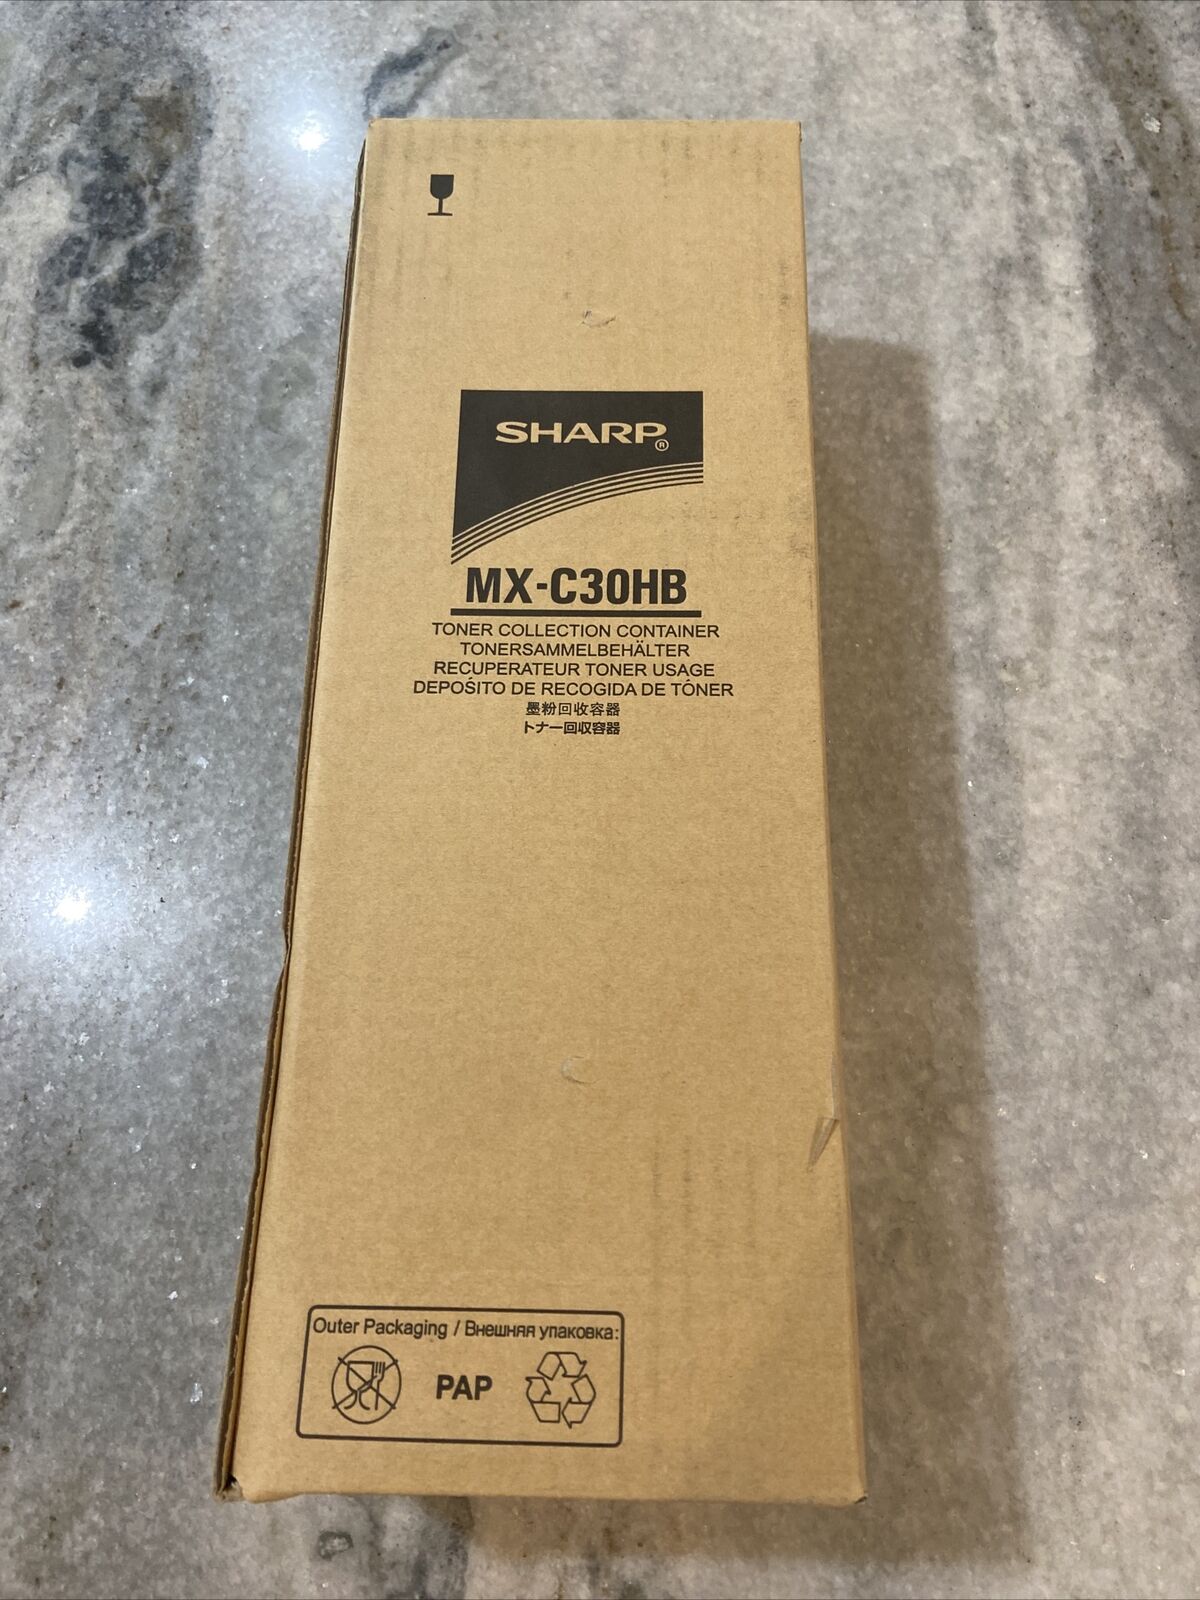 NEW Genuine Sharp MX-C30HB Toner Collection Container